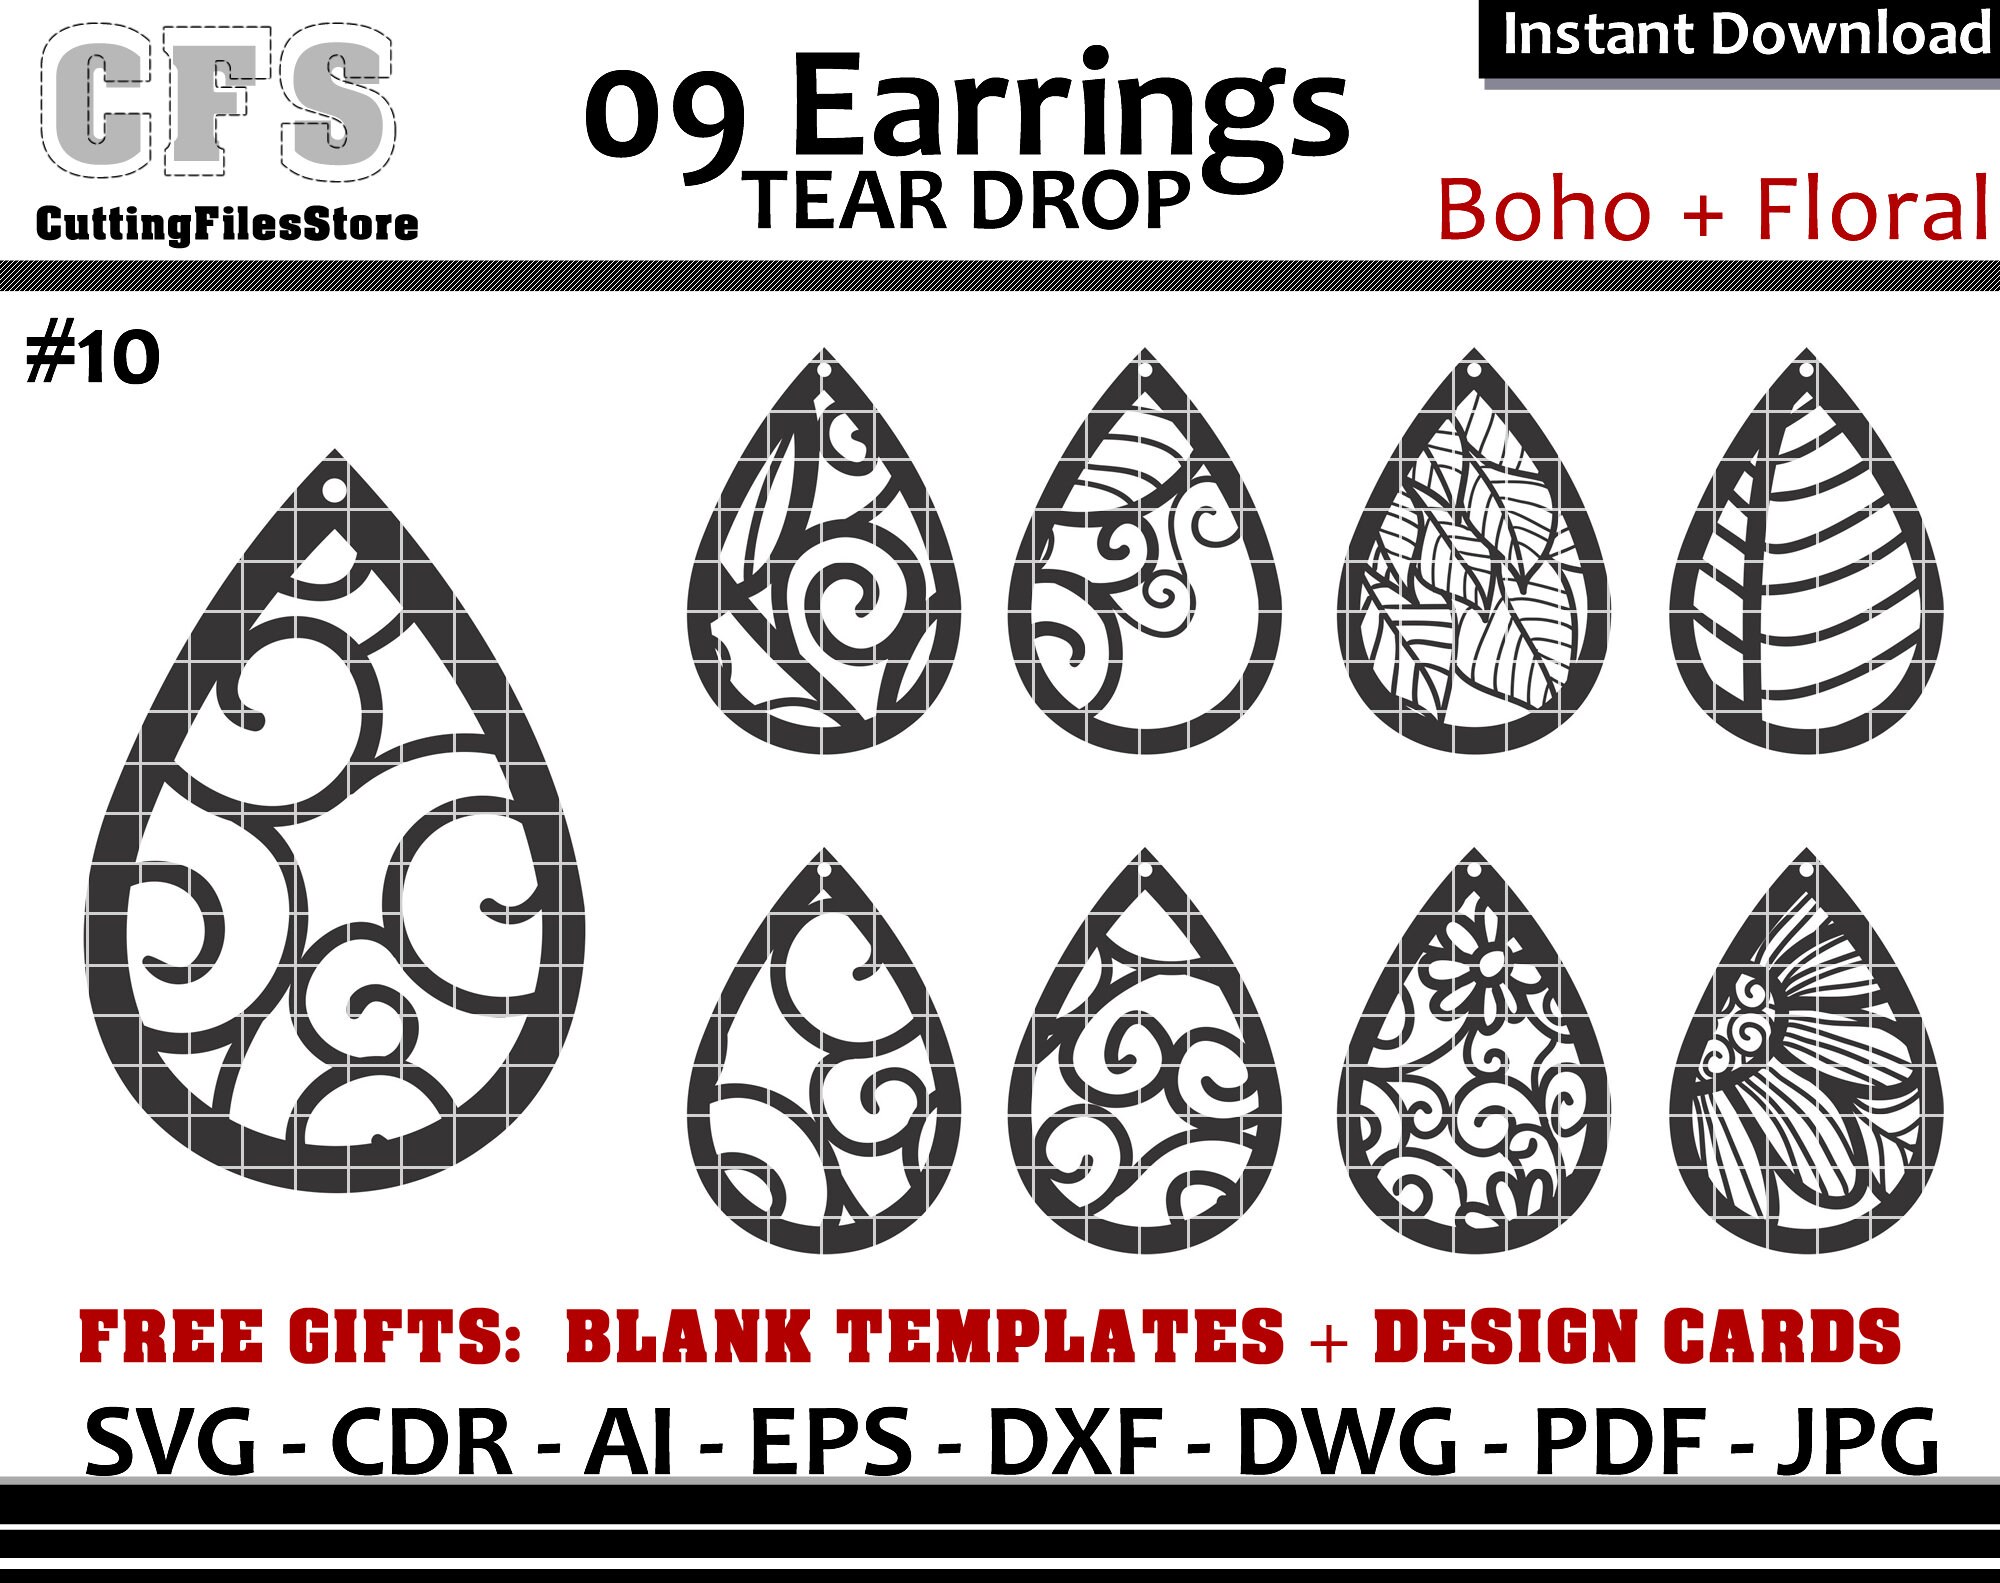 Earrings SVG Tear Drop Boho Floral Cut Files Gifts | Etsy